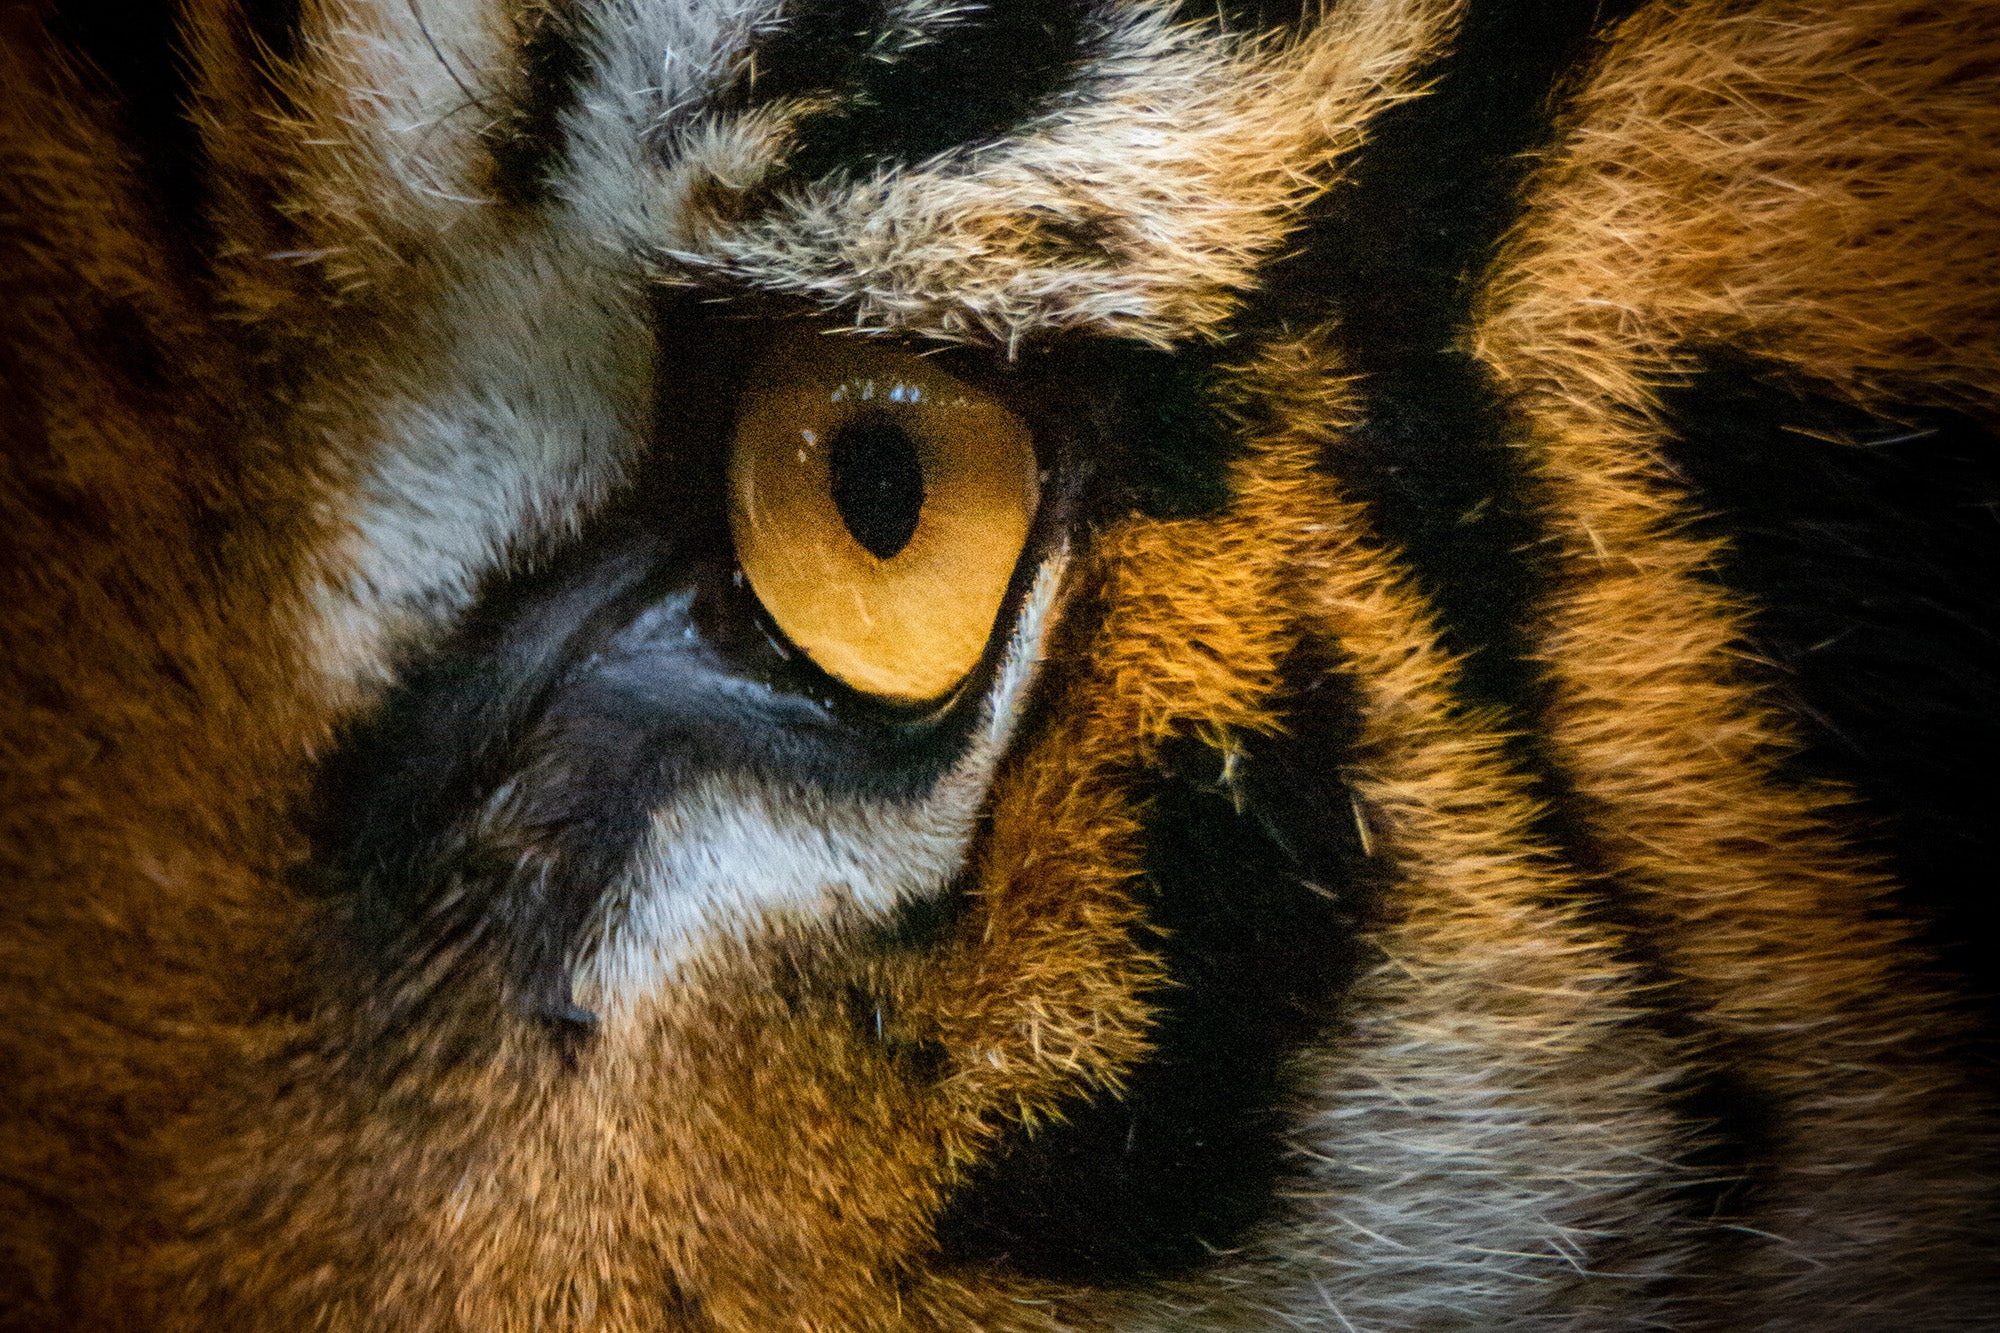 Close up of tiger - credit Ralph Mayhew via Unsplash